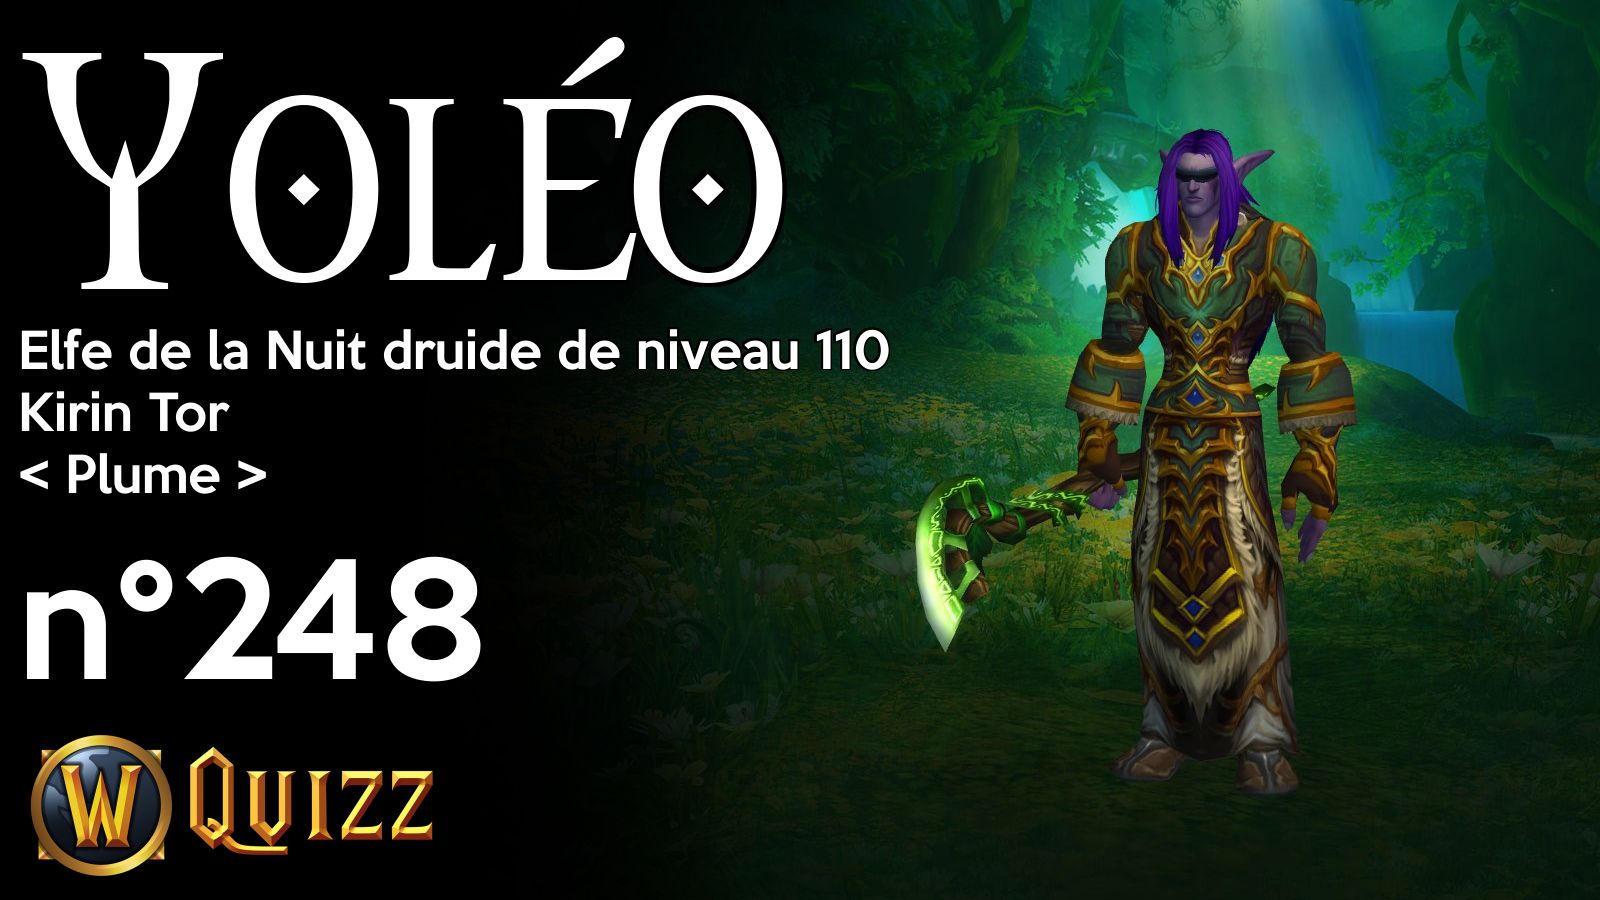 Yoléo, Elfe de la Nuit druide de niveau 110, Kirin Tor